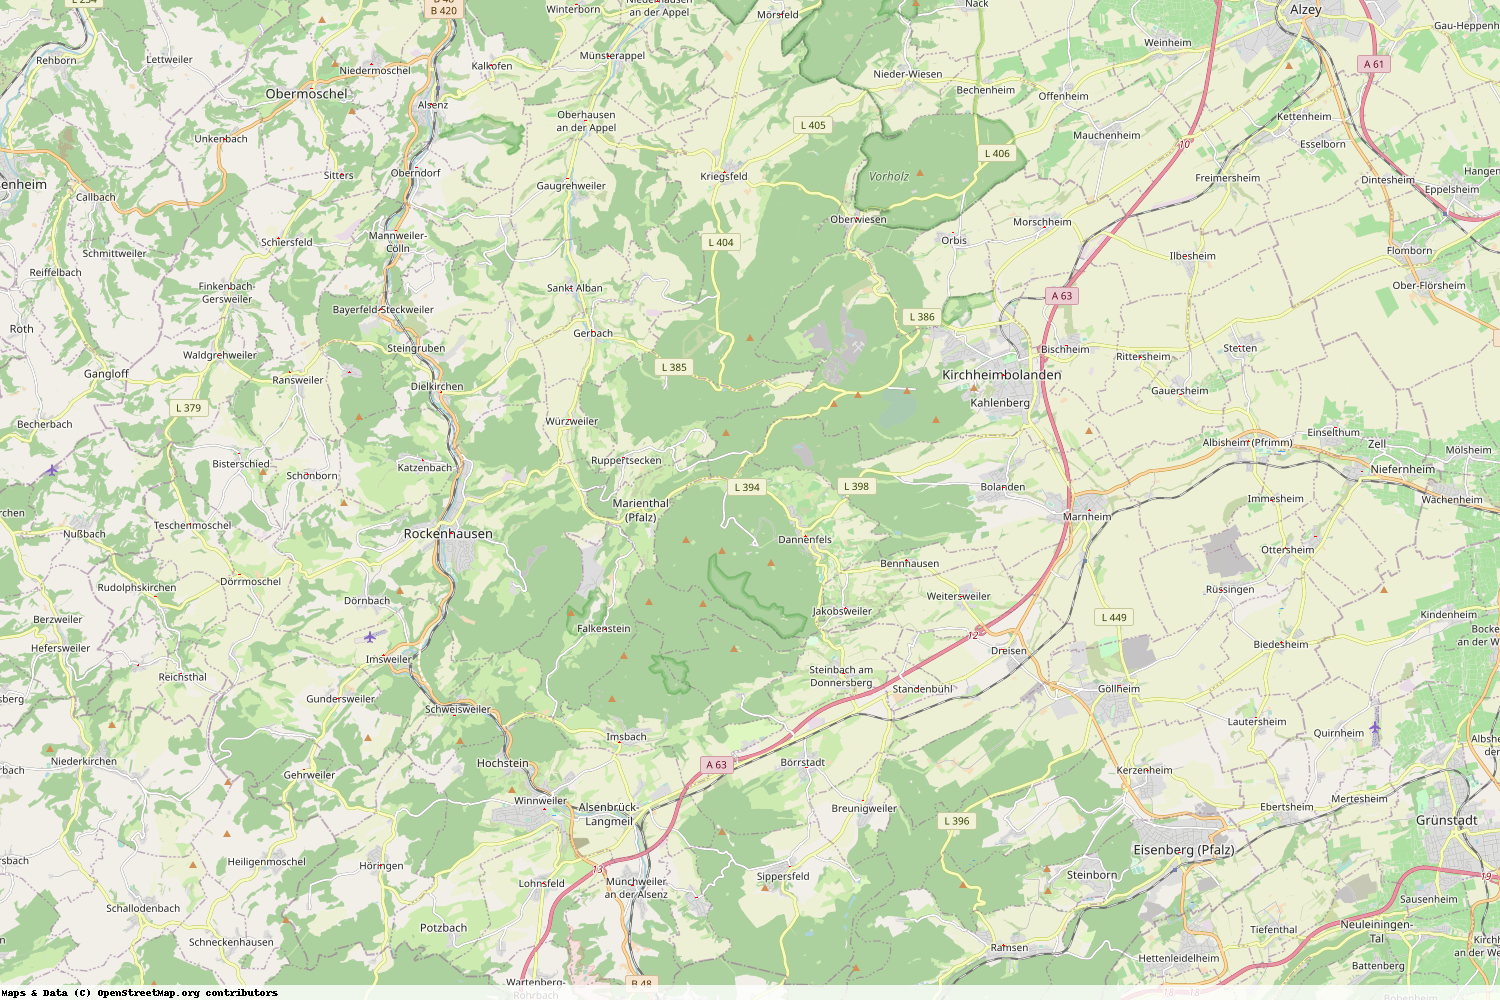 Ist gerade Stromausfall in Rheinland-Pfalz - Donnersbergkreis?